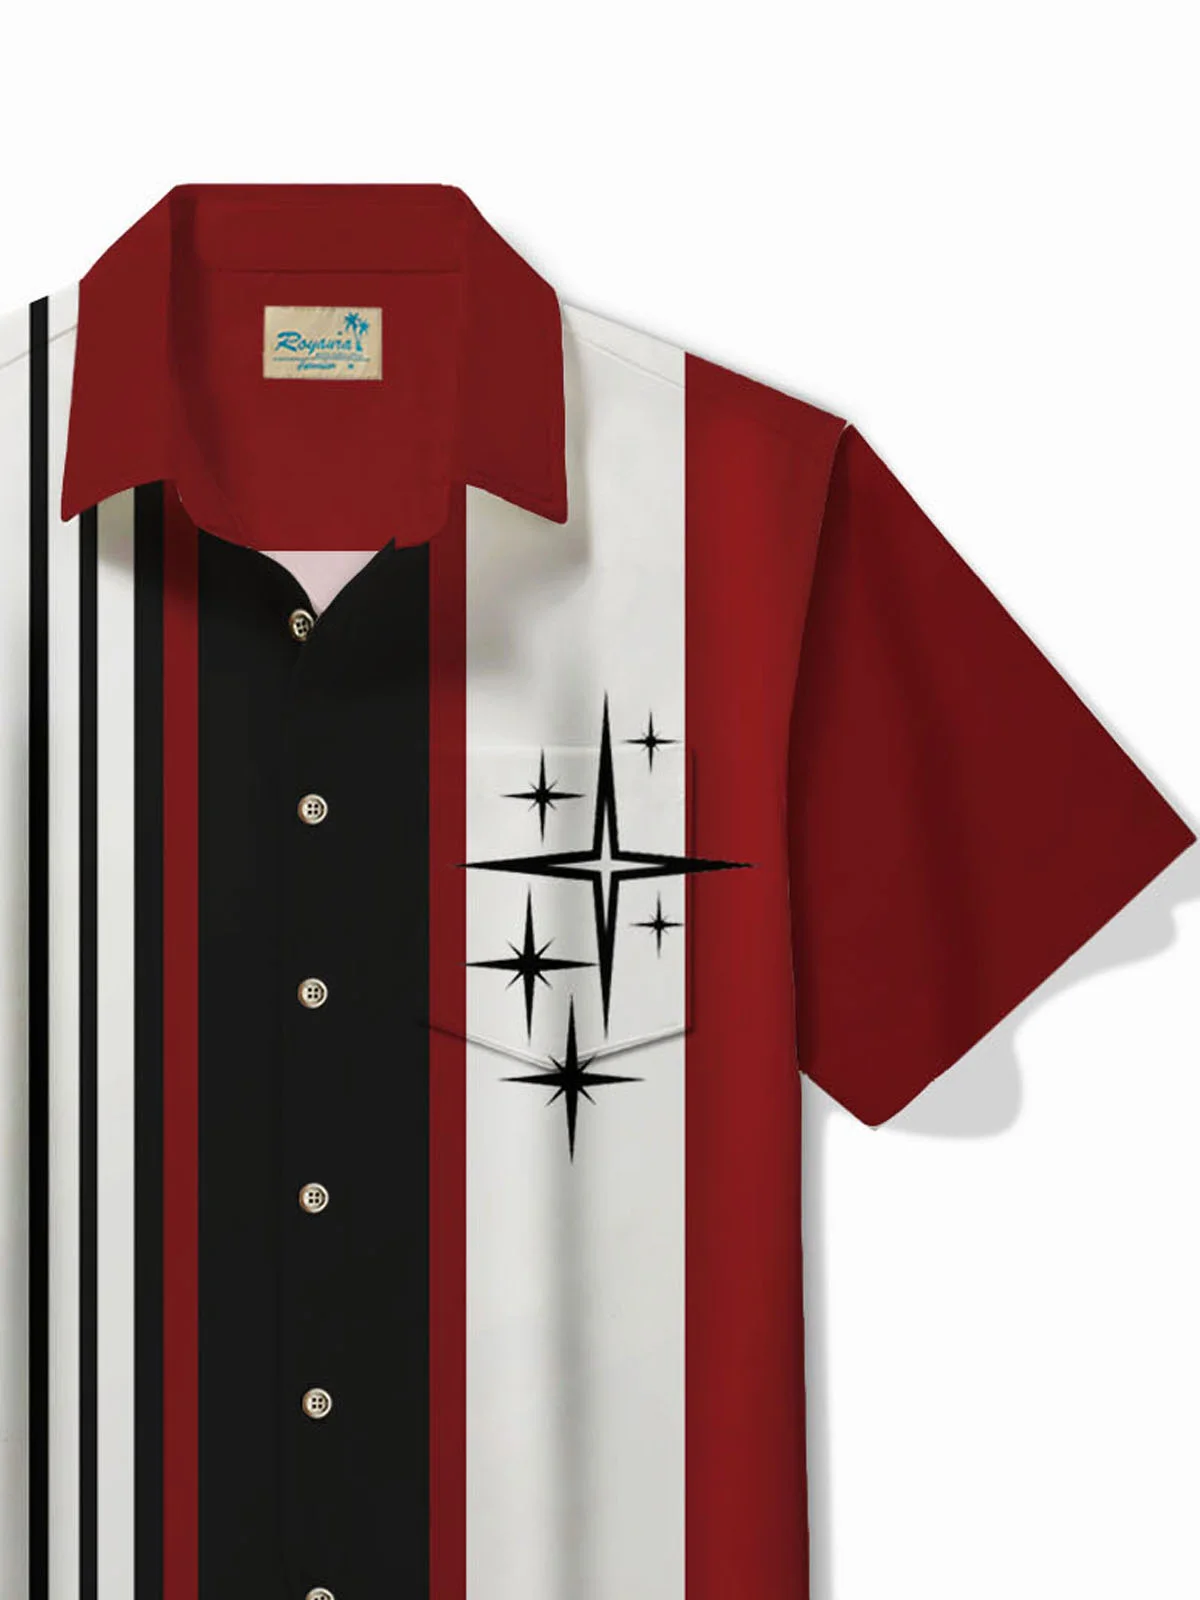 Royaura® Retro Bowling Stripe Geometric Print Men's Button Pocket Short Sleeve Shirt